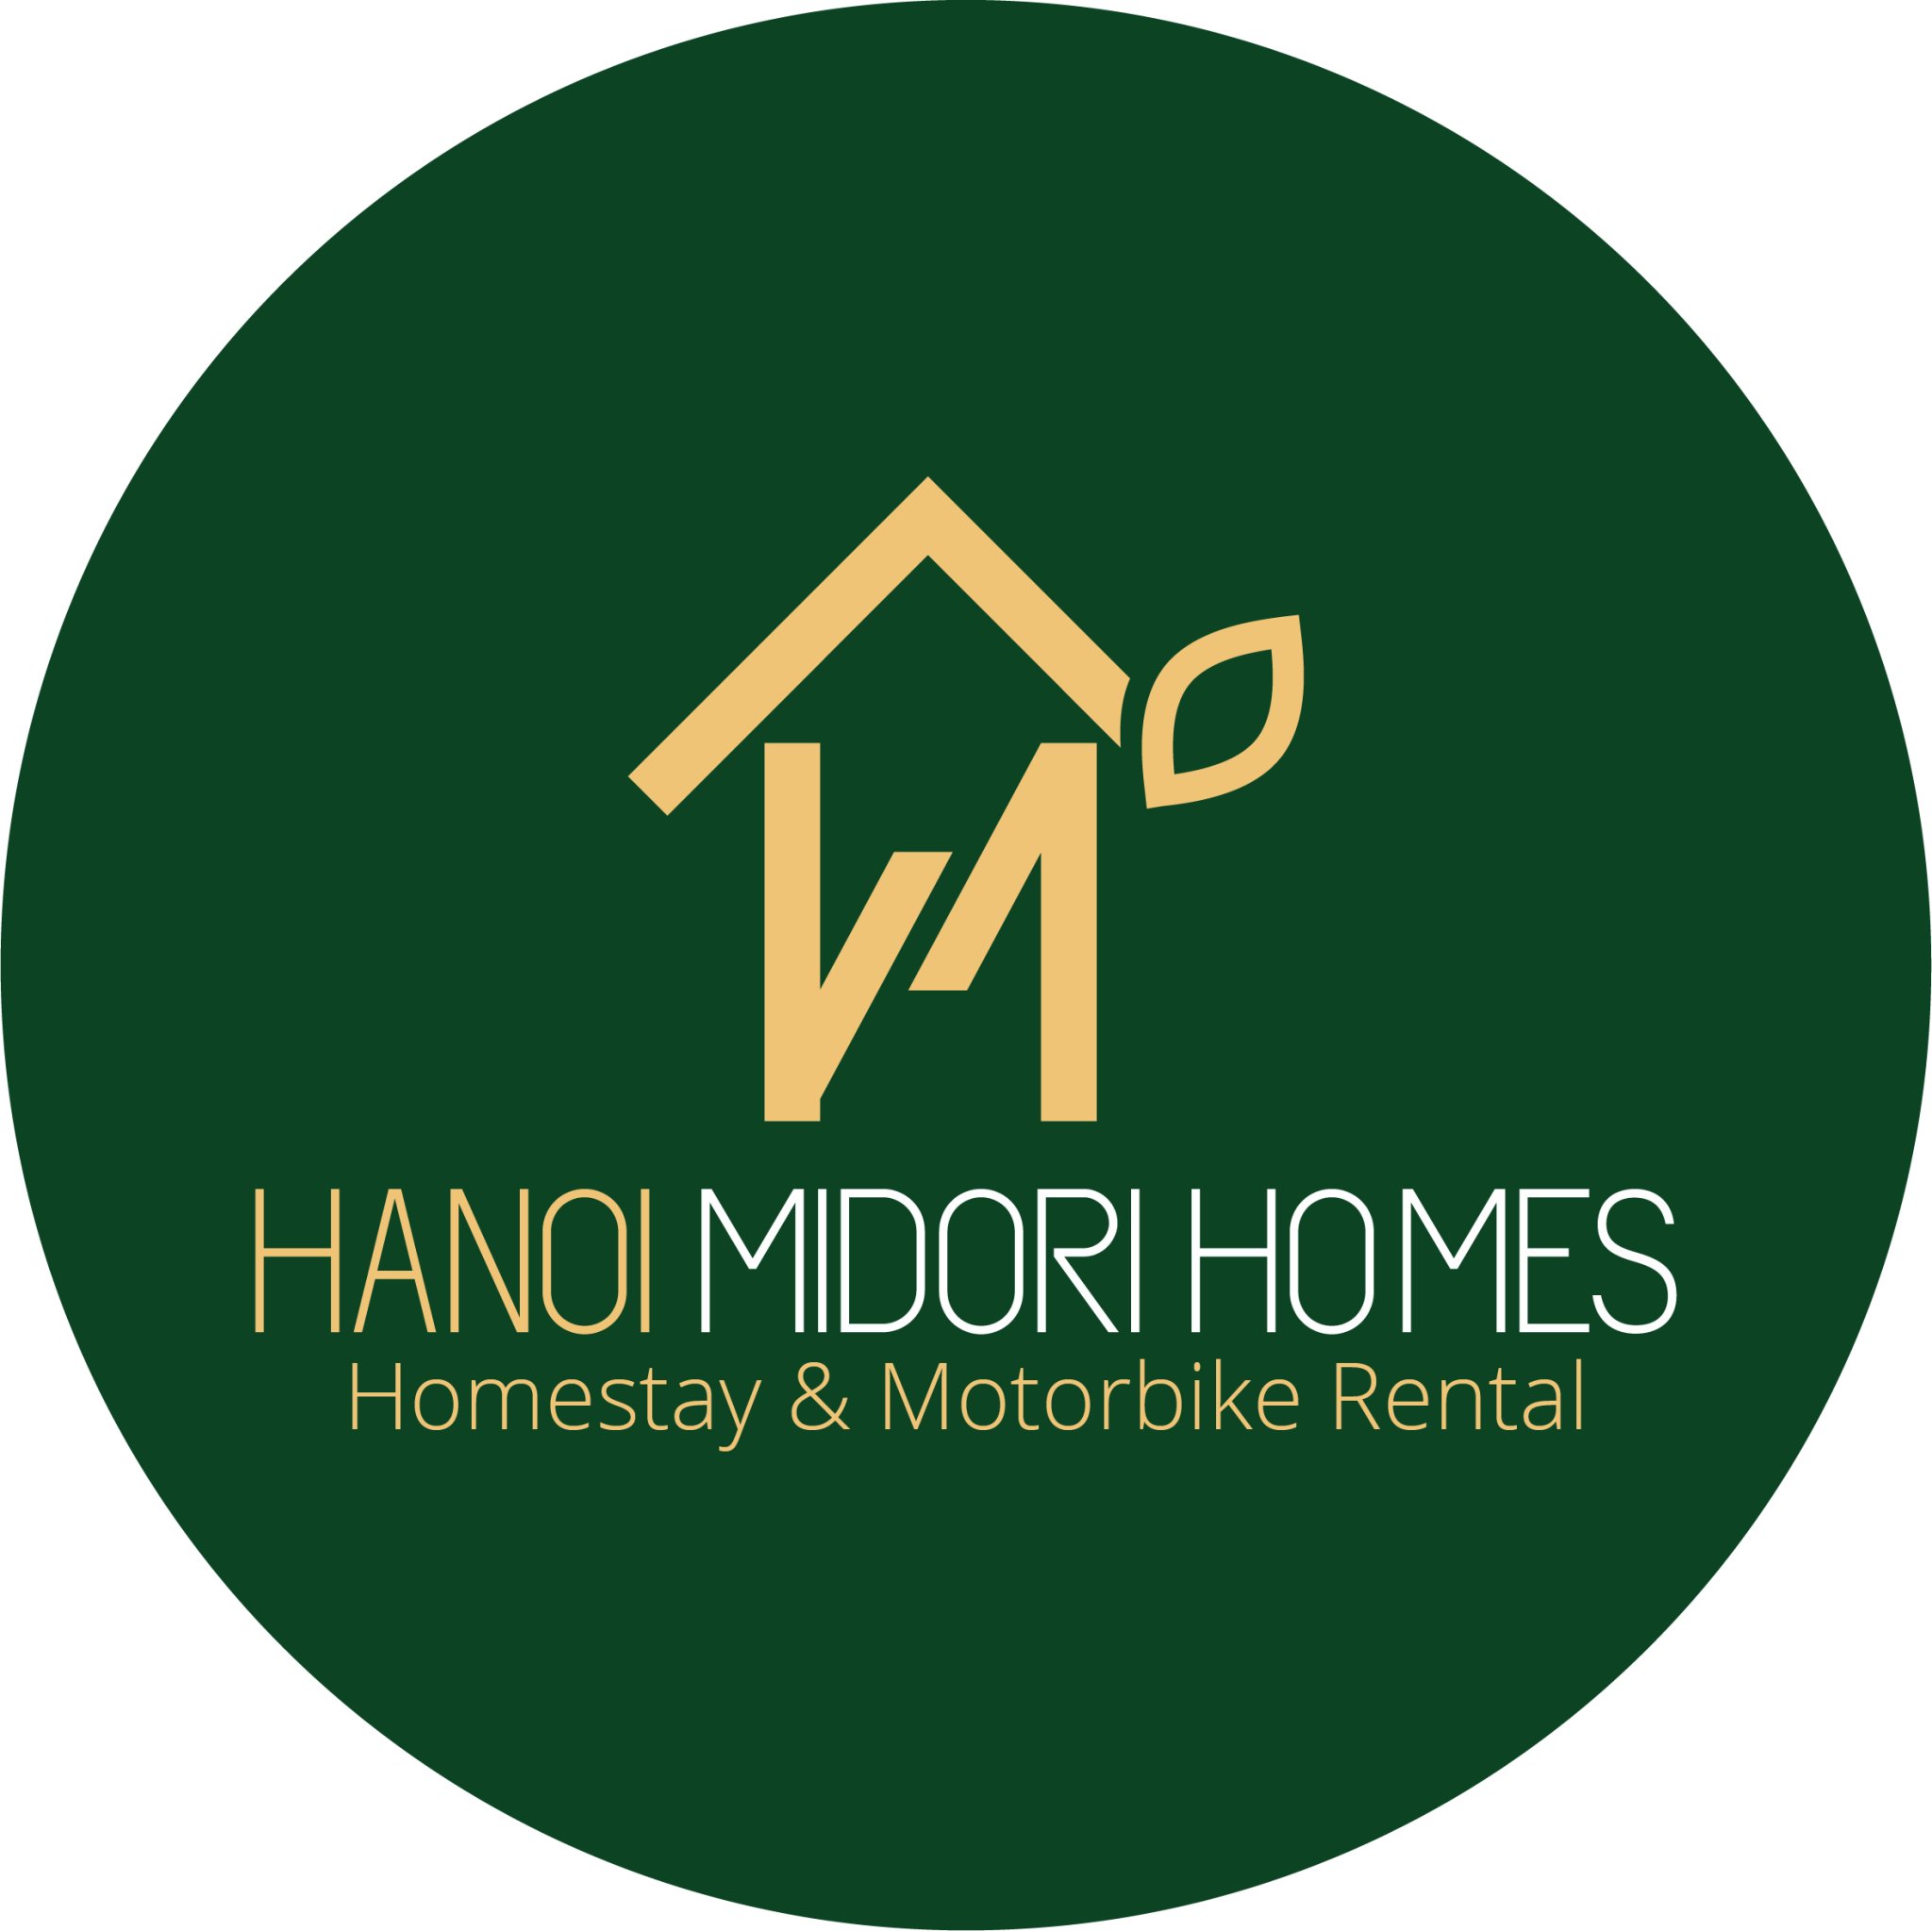 Hanoi Midori Motorbike Rental – Thuê Xe Máy Hà Nội Midori Homes